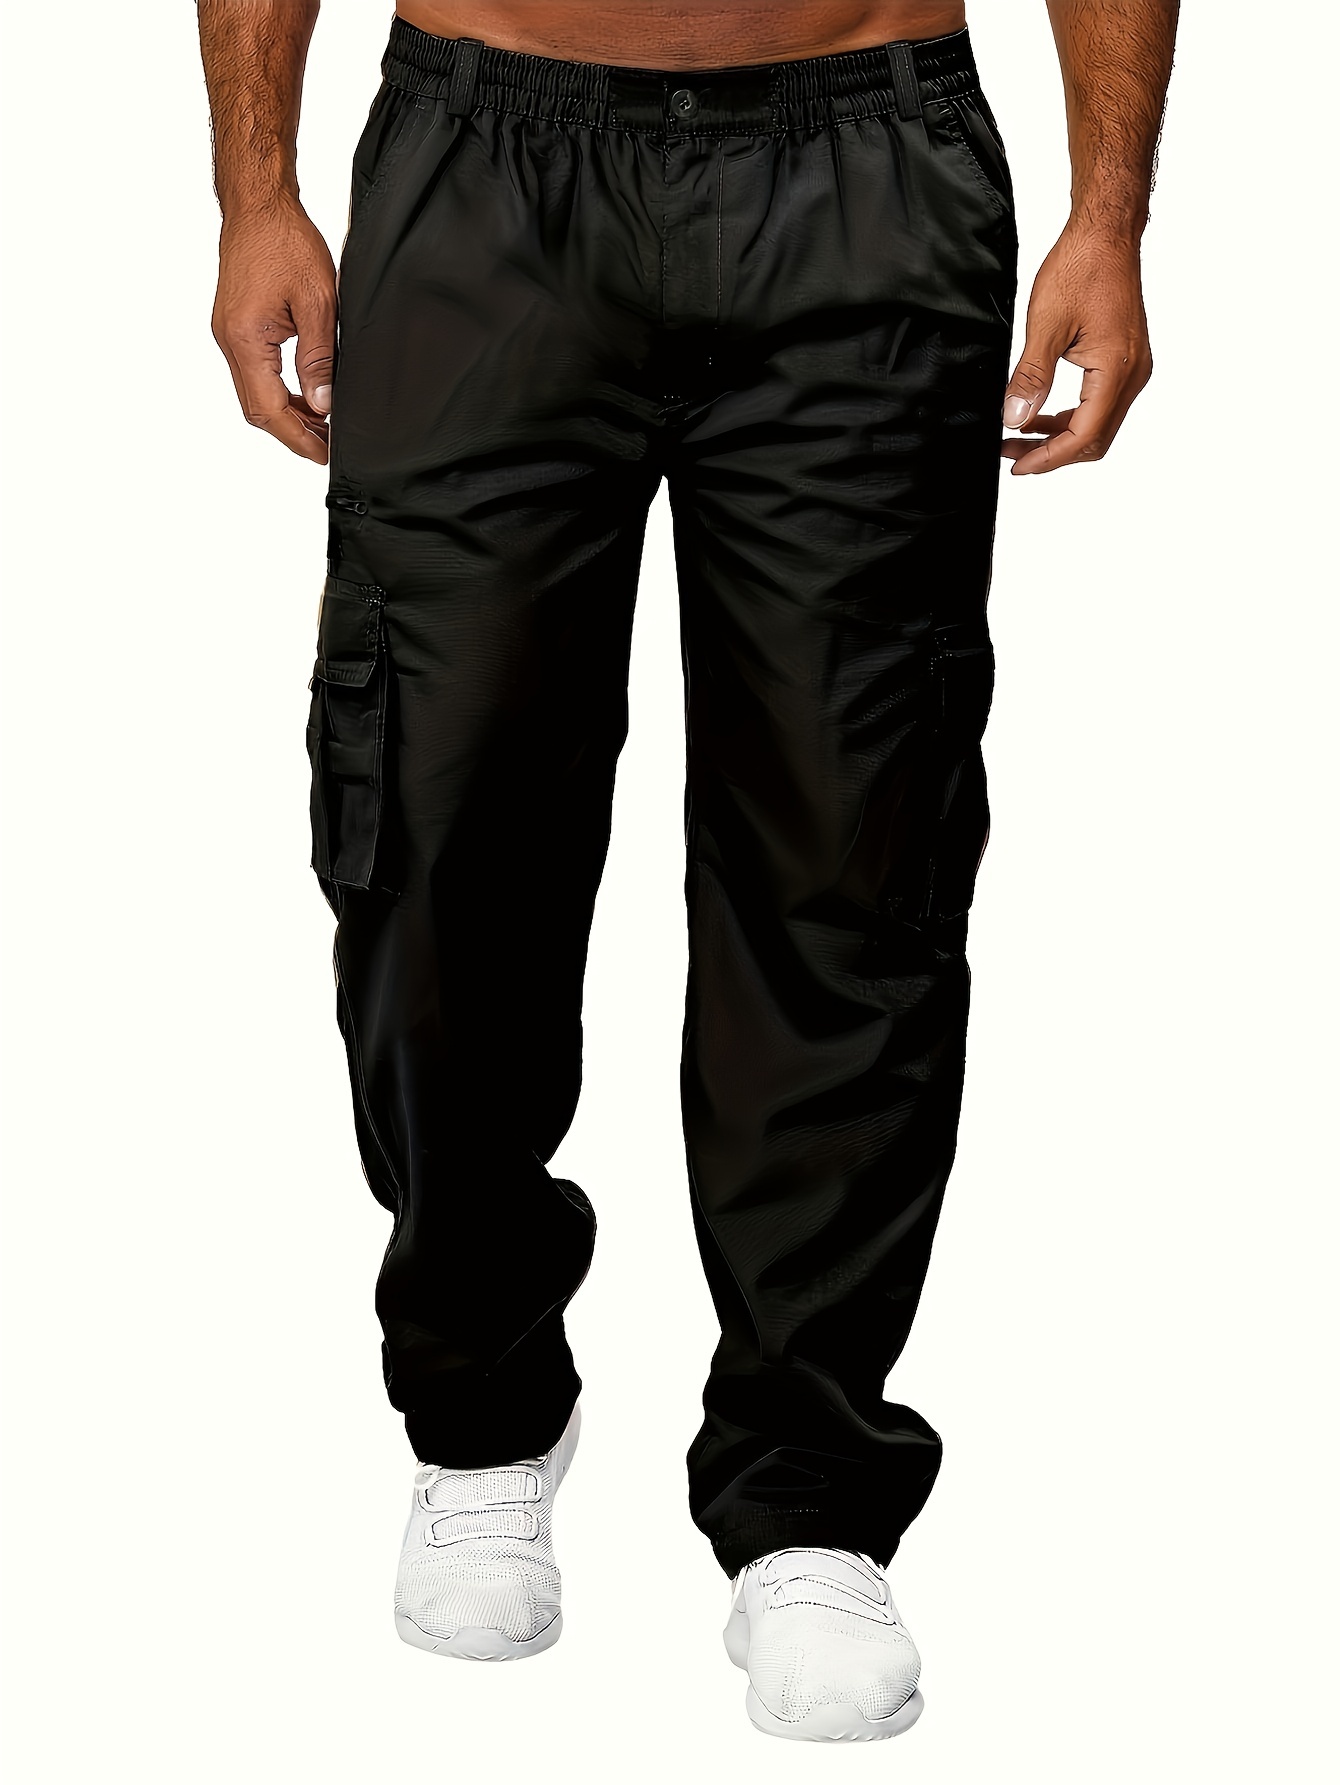 black cargo pants for men men fashion sports casual pants elastic